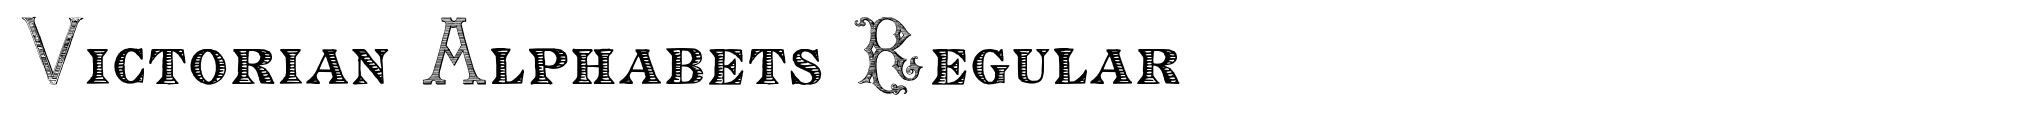 Victorian Alphabets Regular image